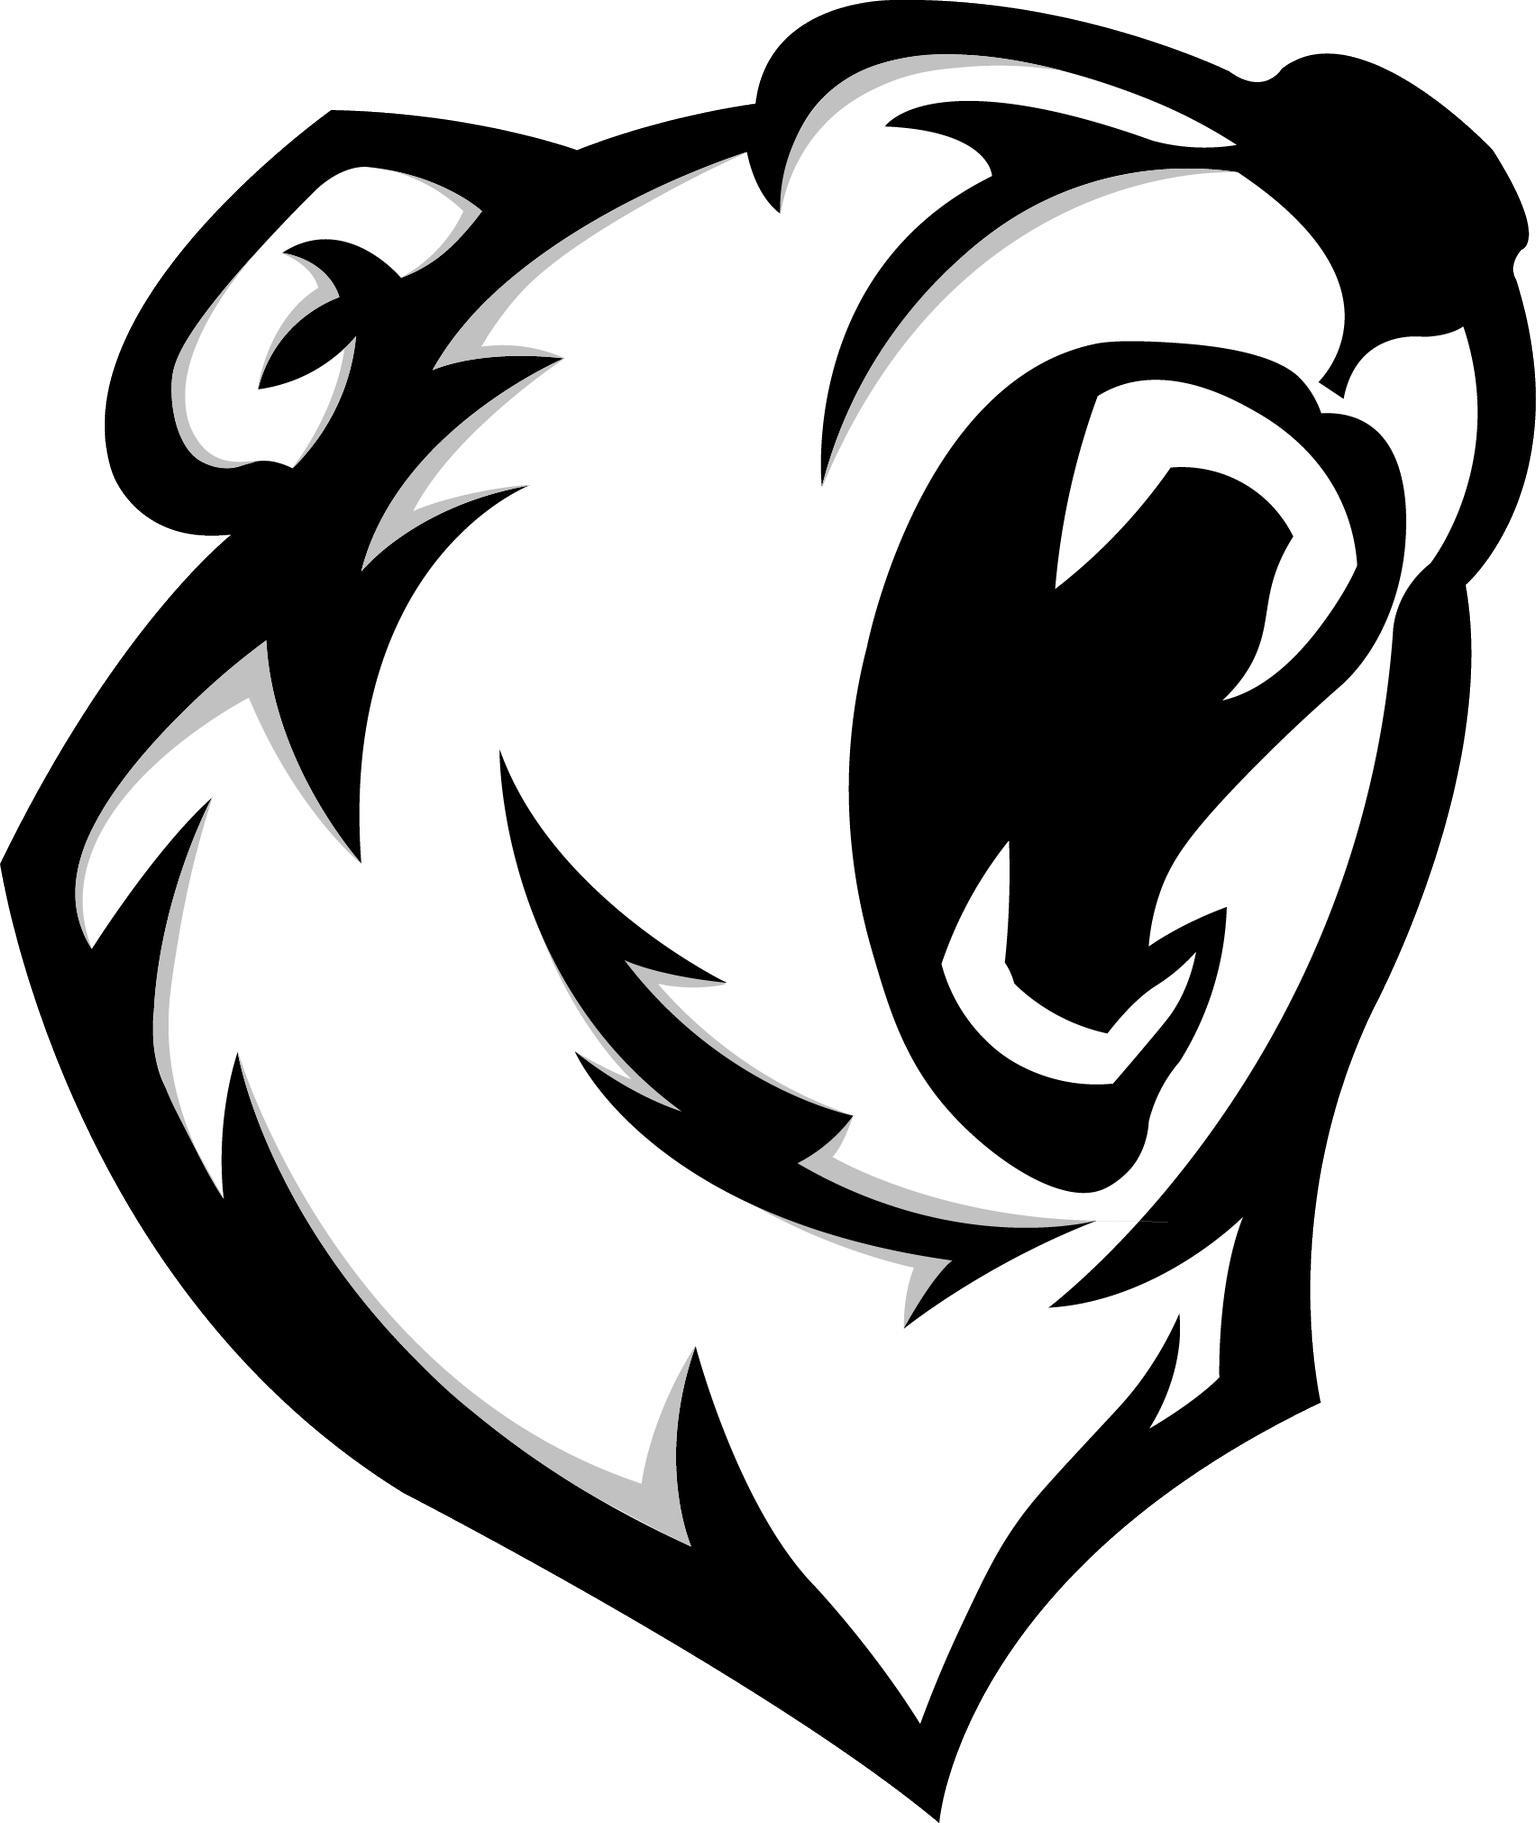 White Bear Logo - Polar Bear Mascot logo & speedart [Ckeck Comments] : logodesign